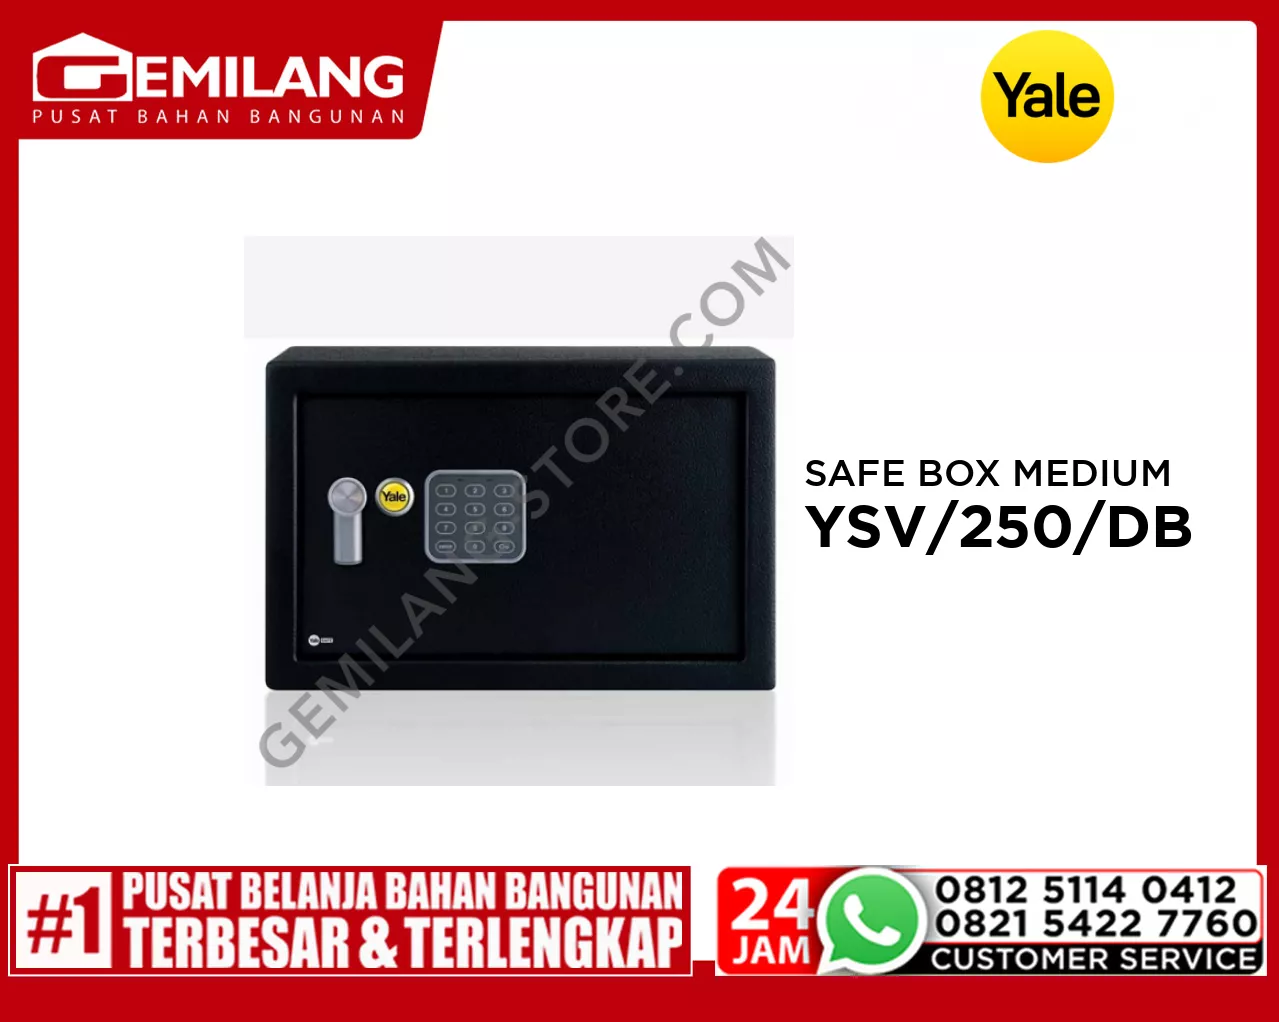 YALE SAFE BOX MEDIUM YSV/250/DB1